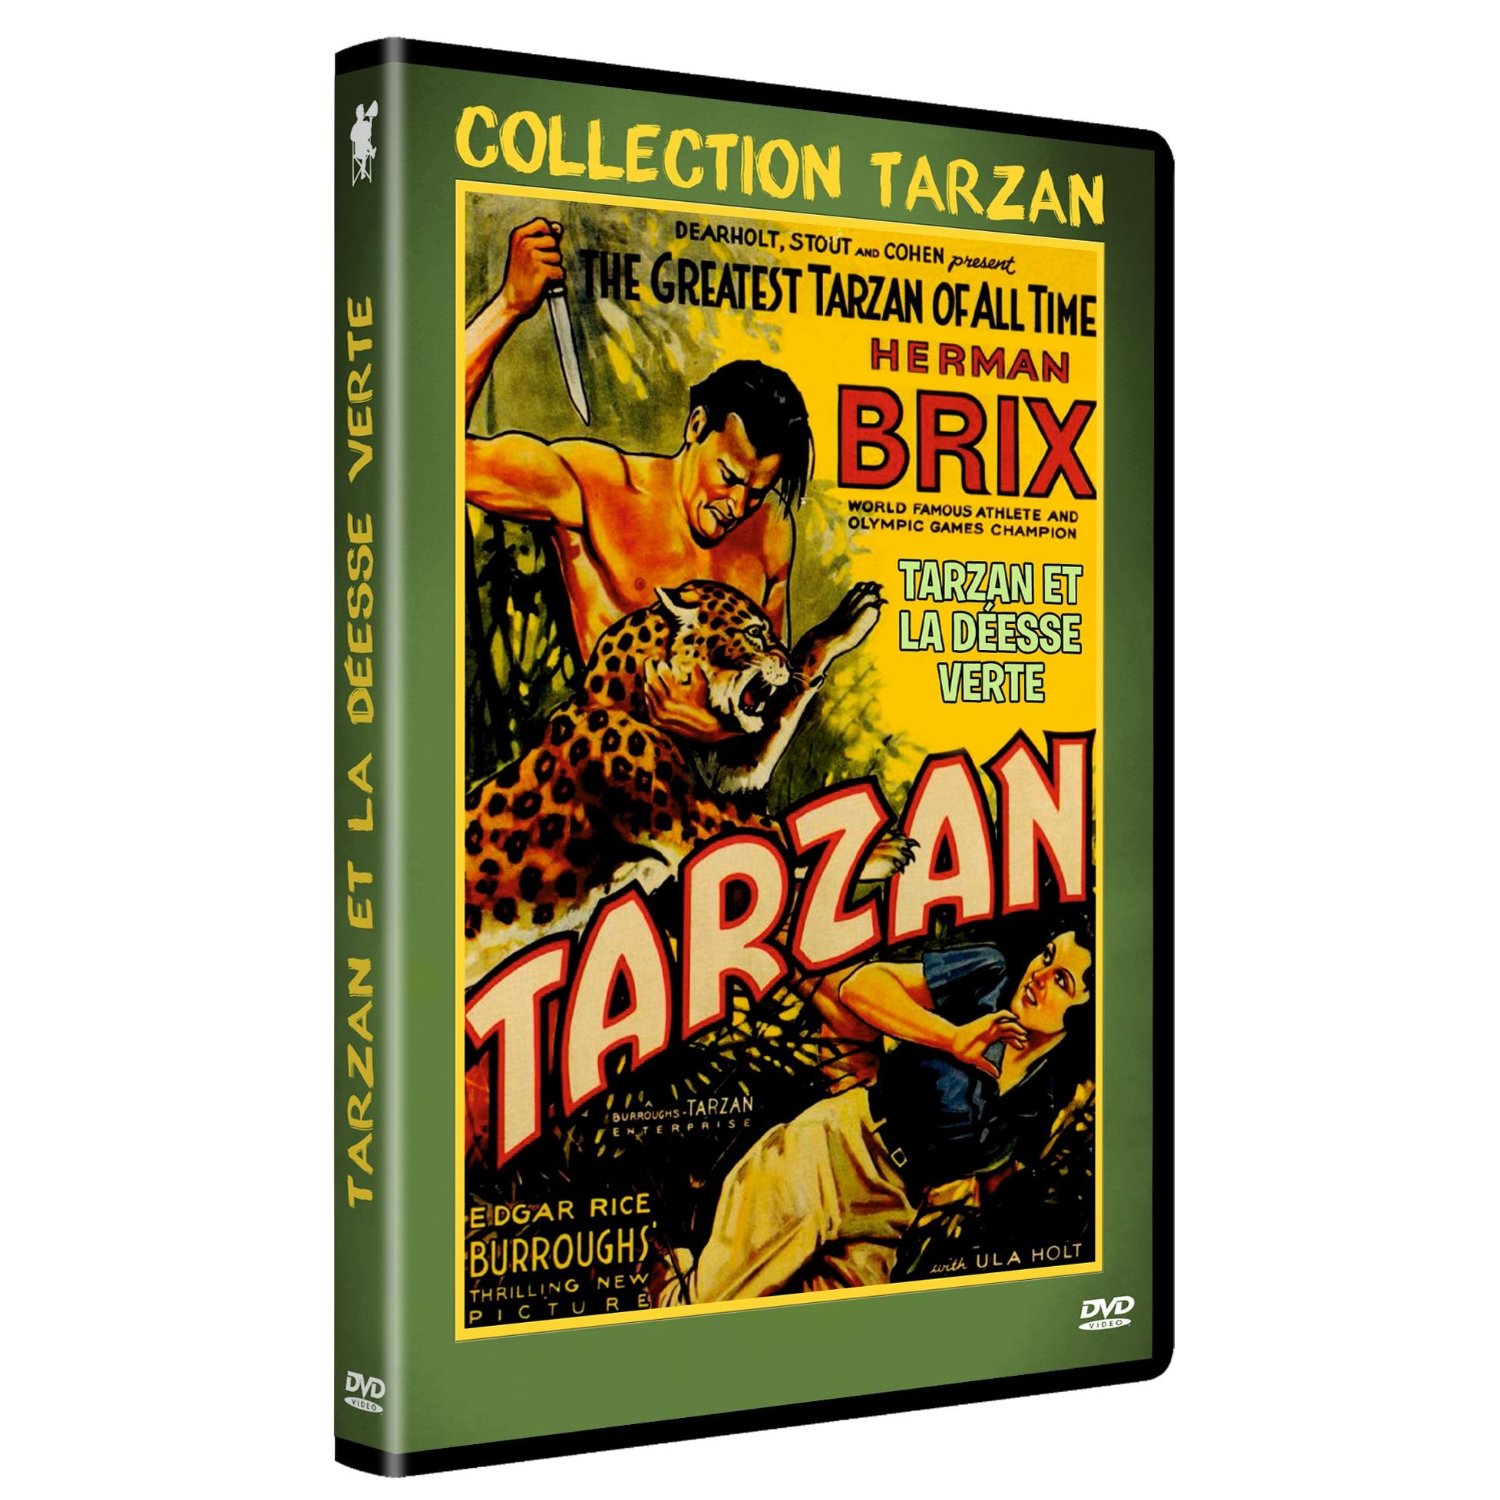 Tarzan revient en DVD chez Bachfilms